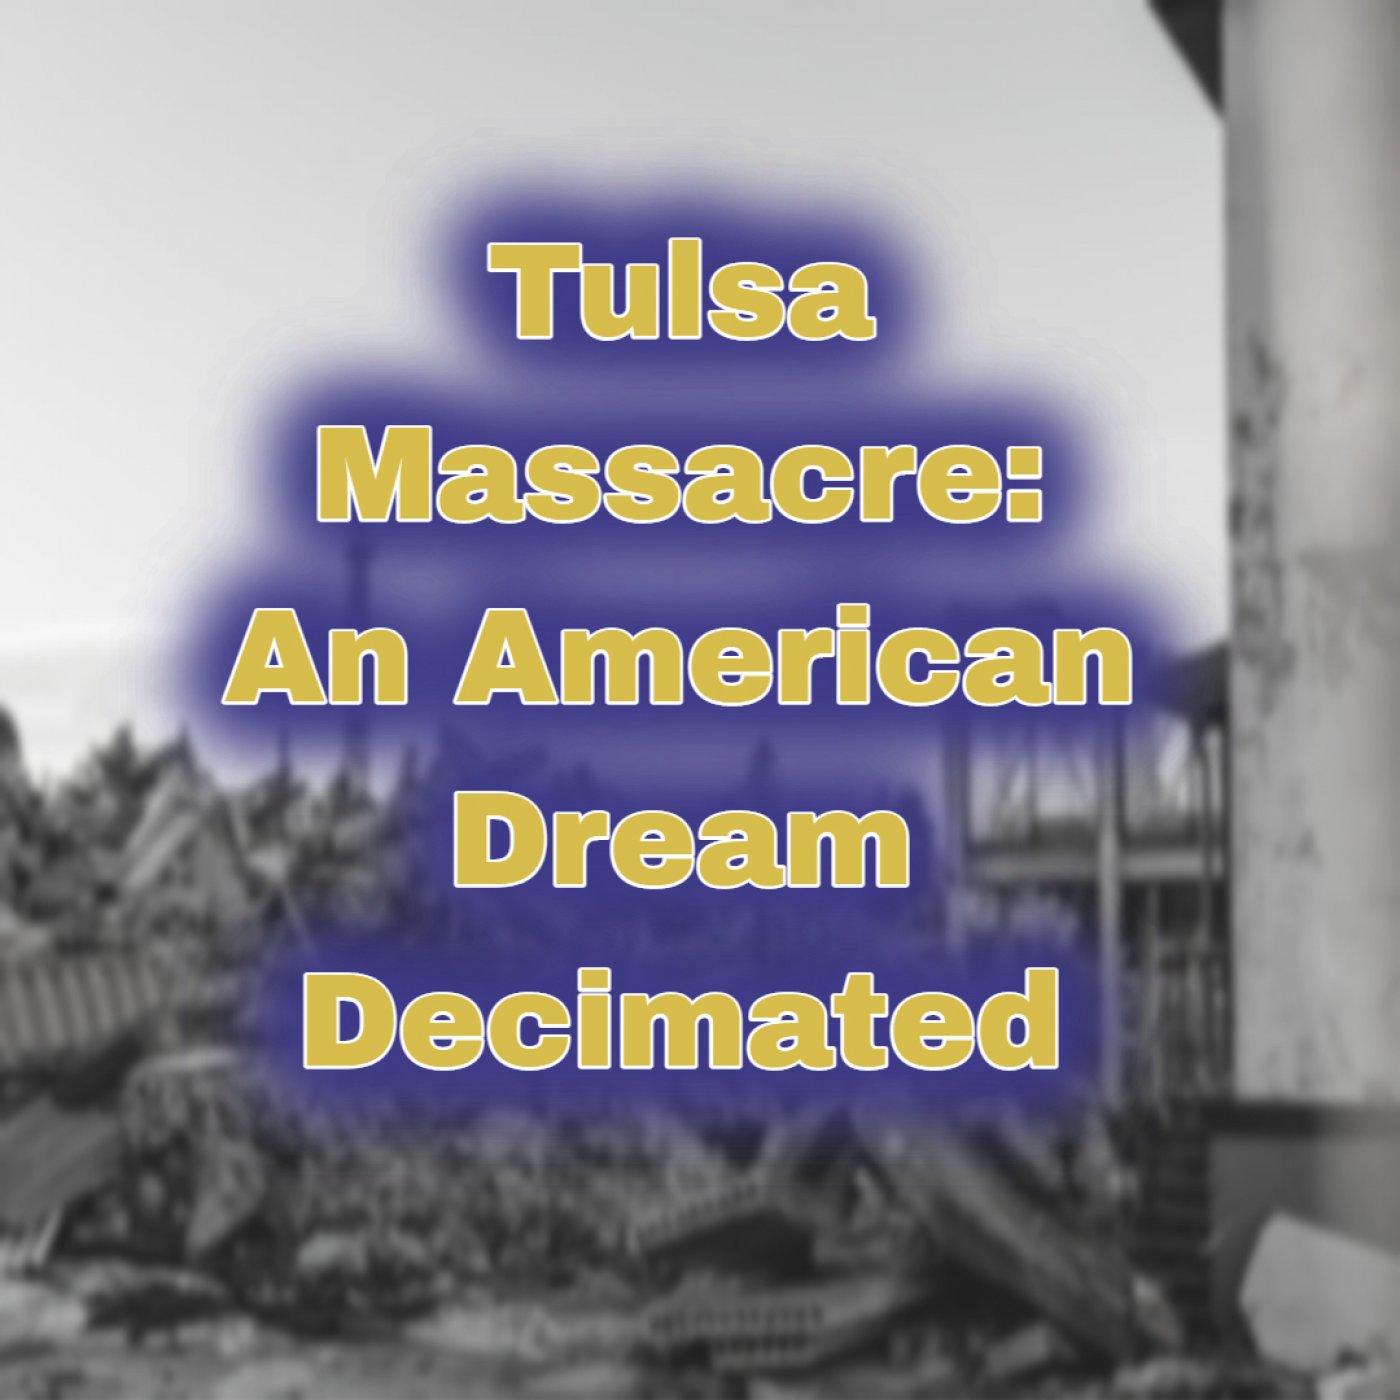 Tulsa Massacre: An American Dream Decimated Image